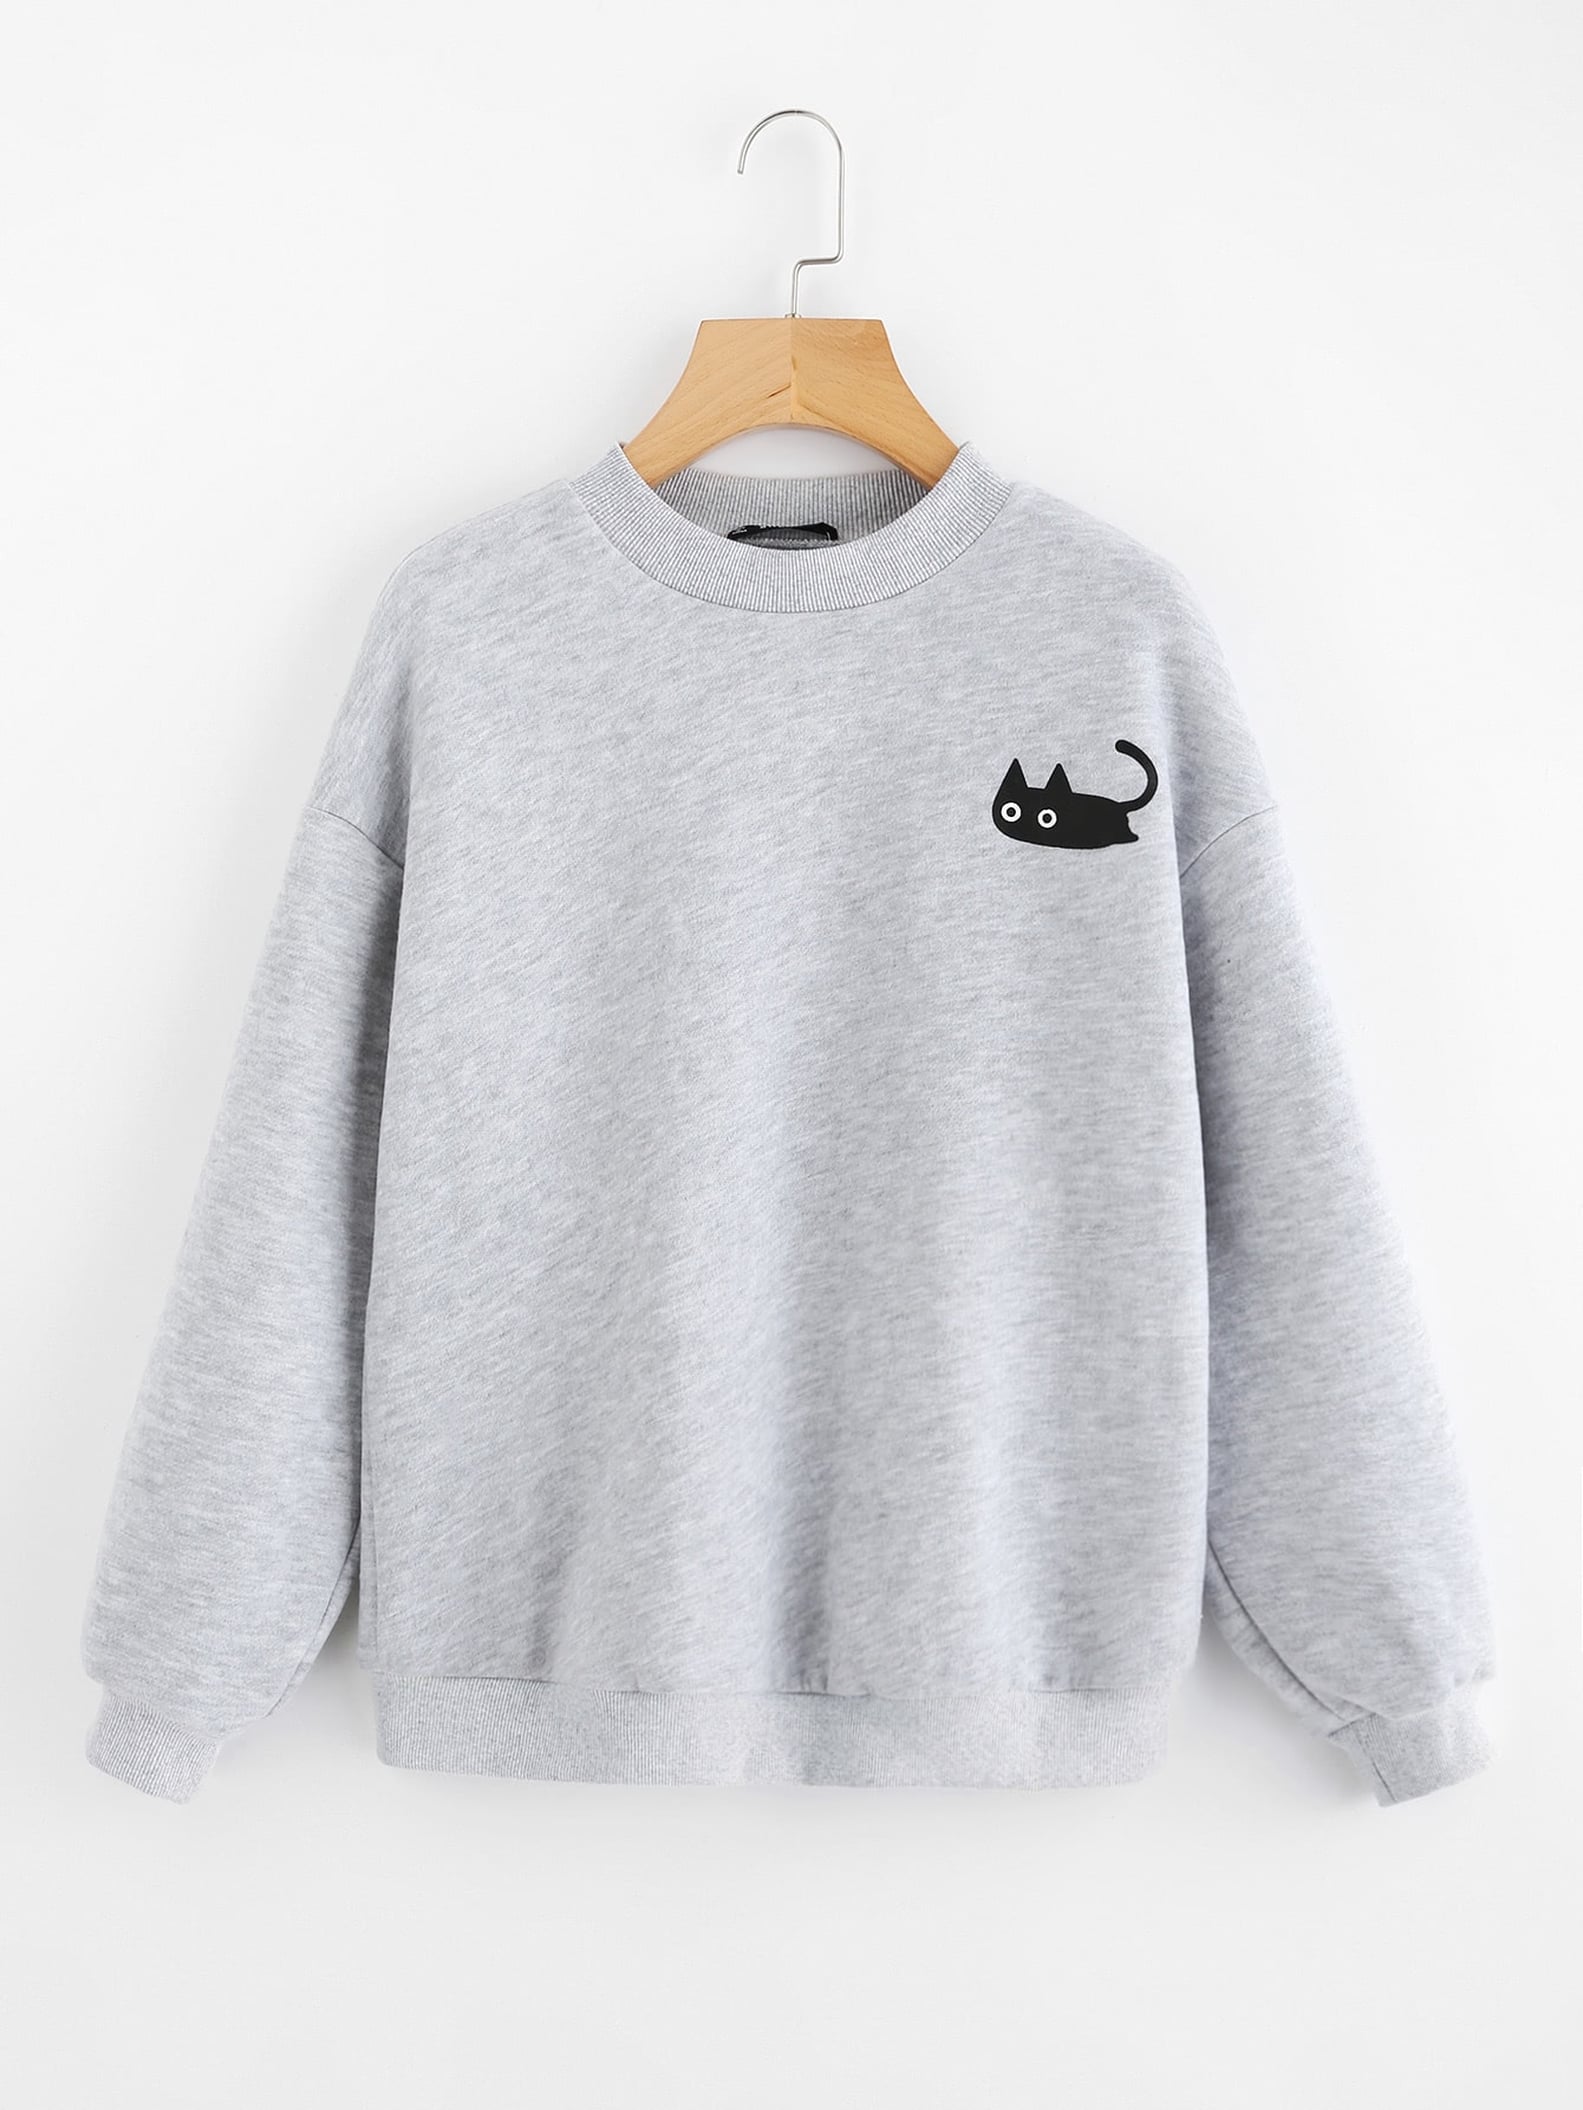 Gwen Stefani's Cat Sweatshirt | POPSUGAR Fashion